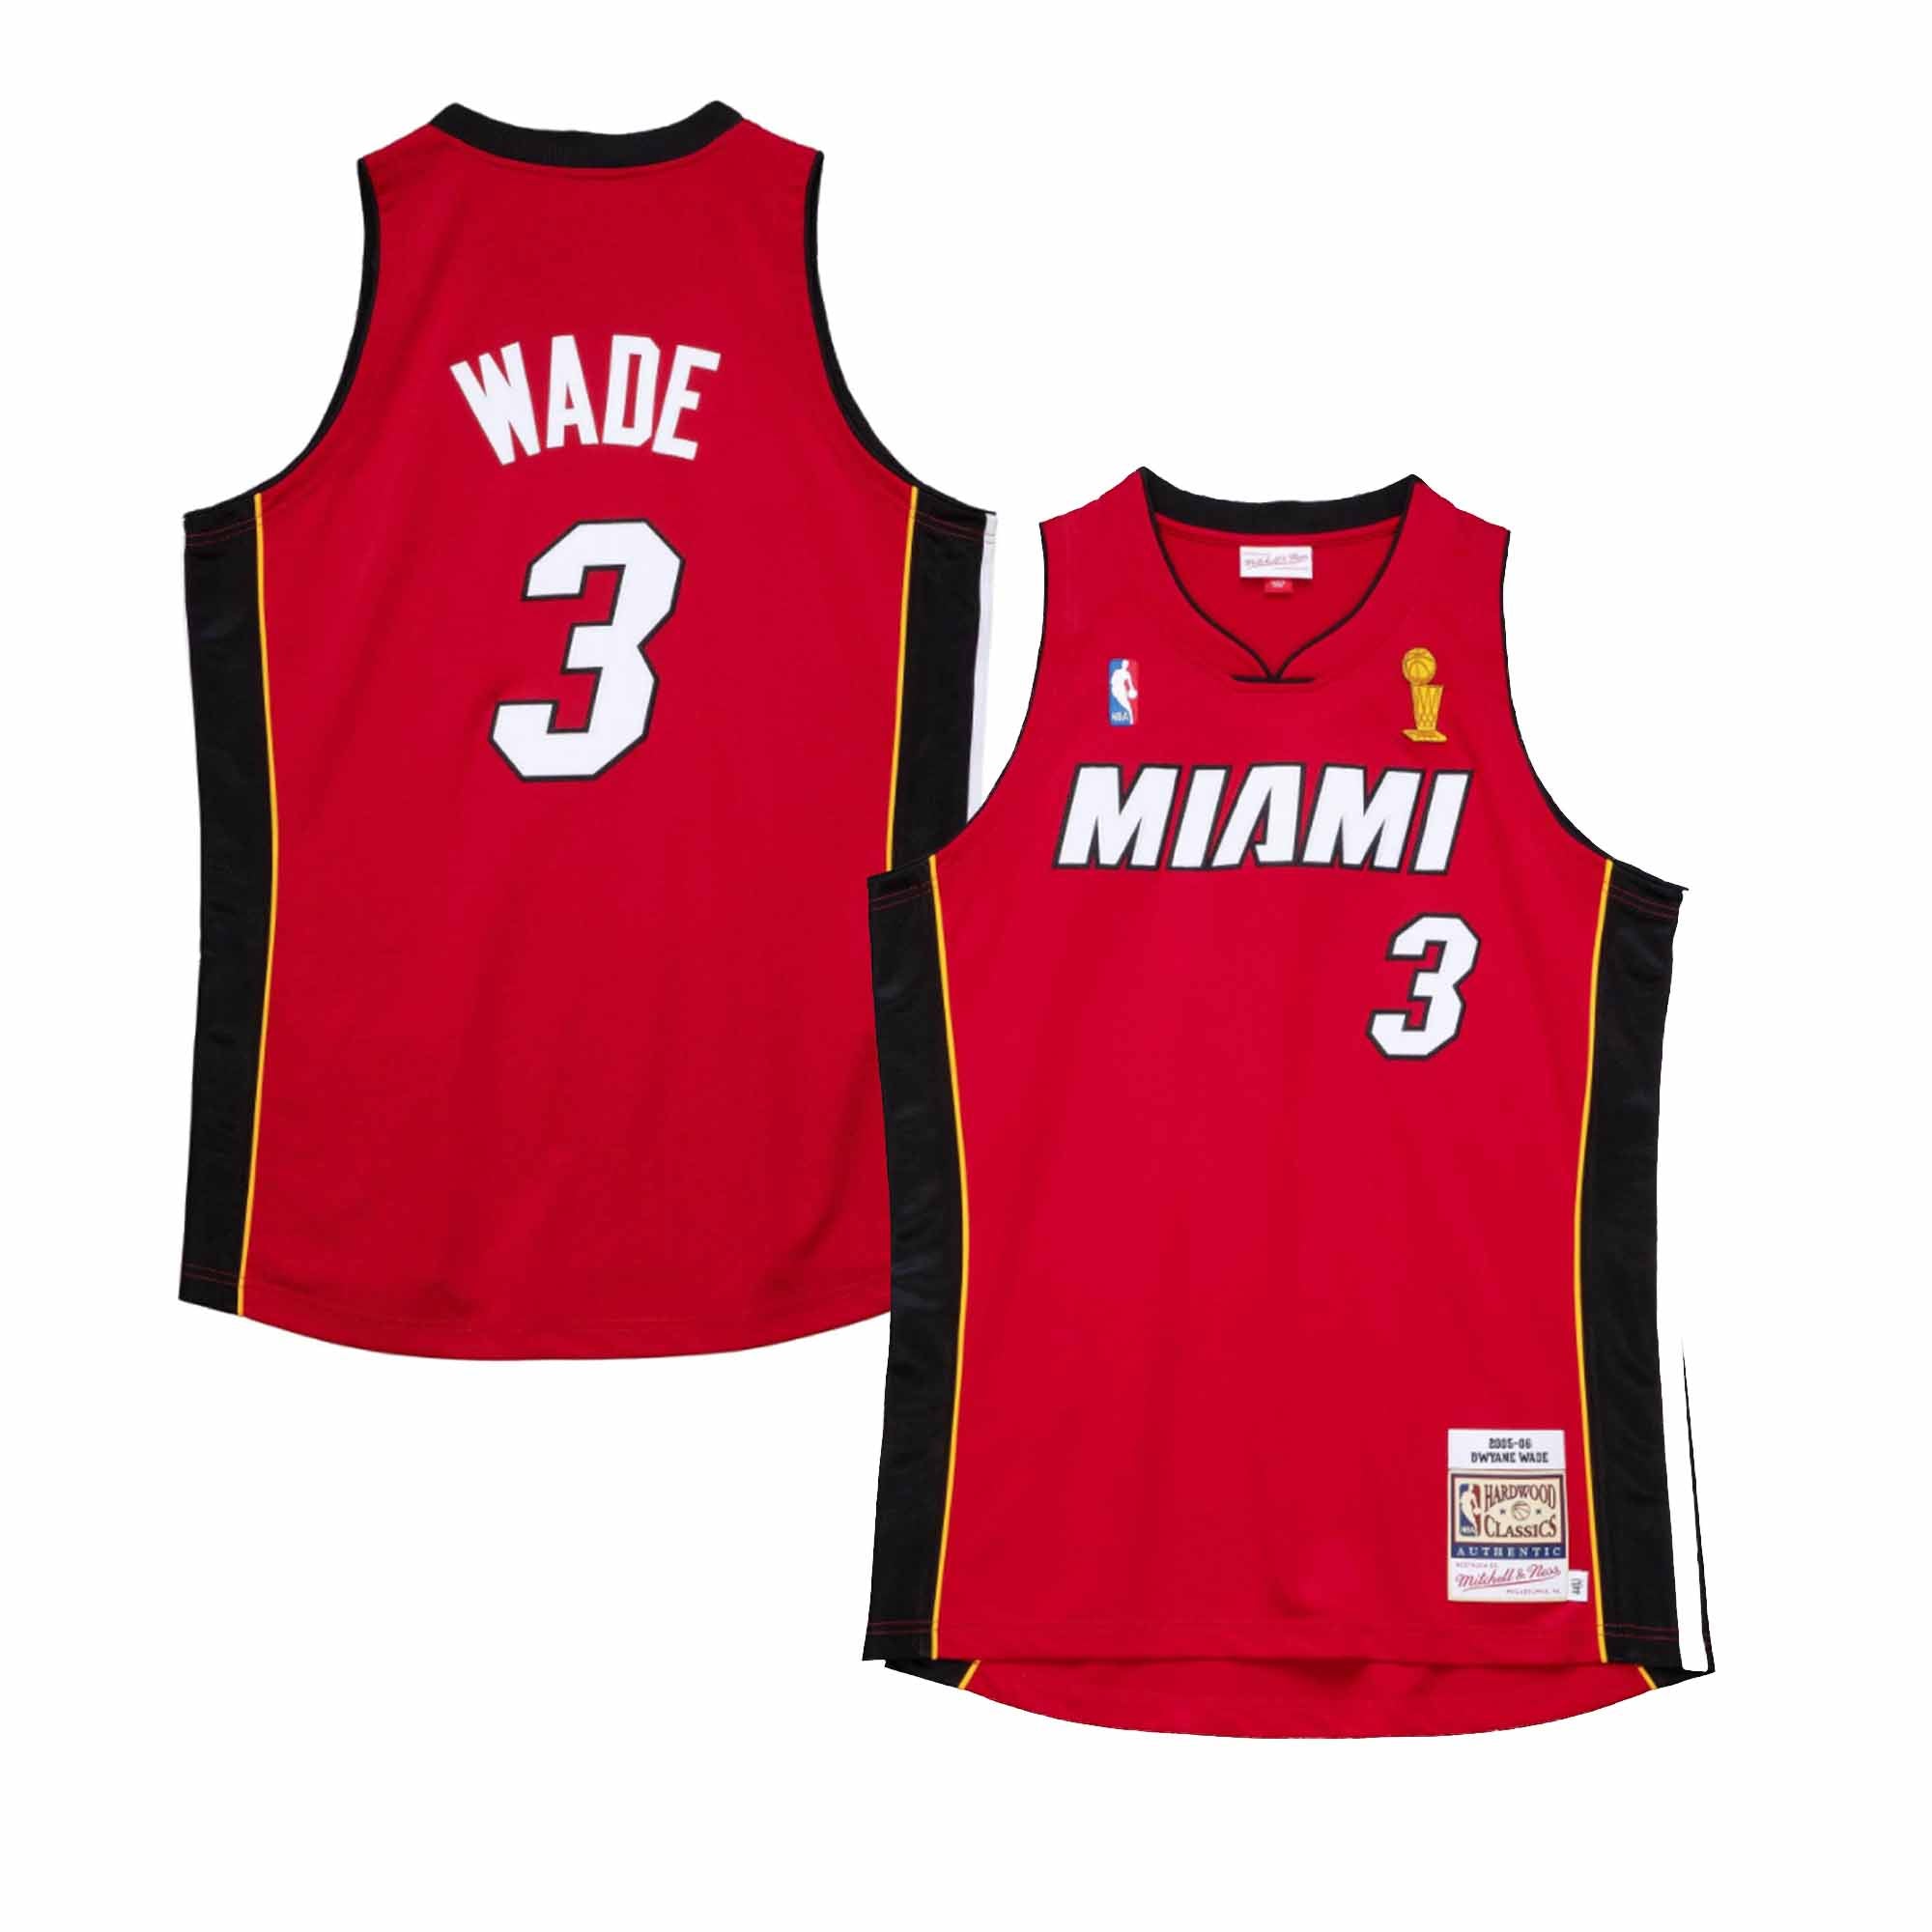 US$ 26.00 - 2005-06 Miami Heat WADE #3 Red Retro Top Quality Hot Pressin g  NBA Jersey - m.